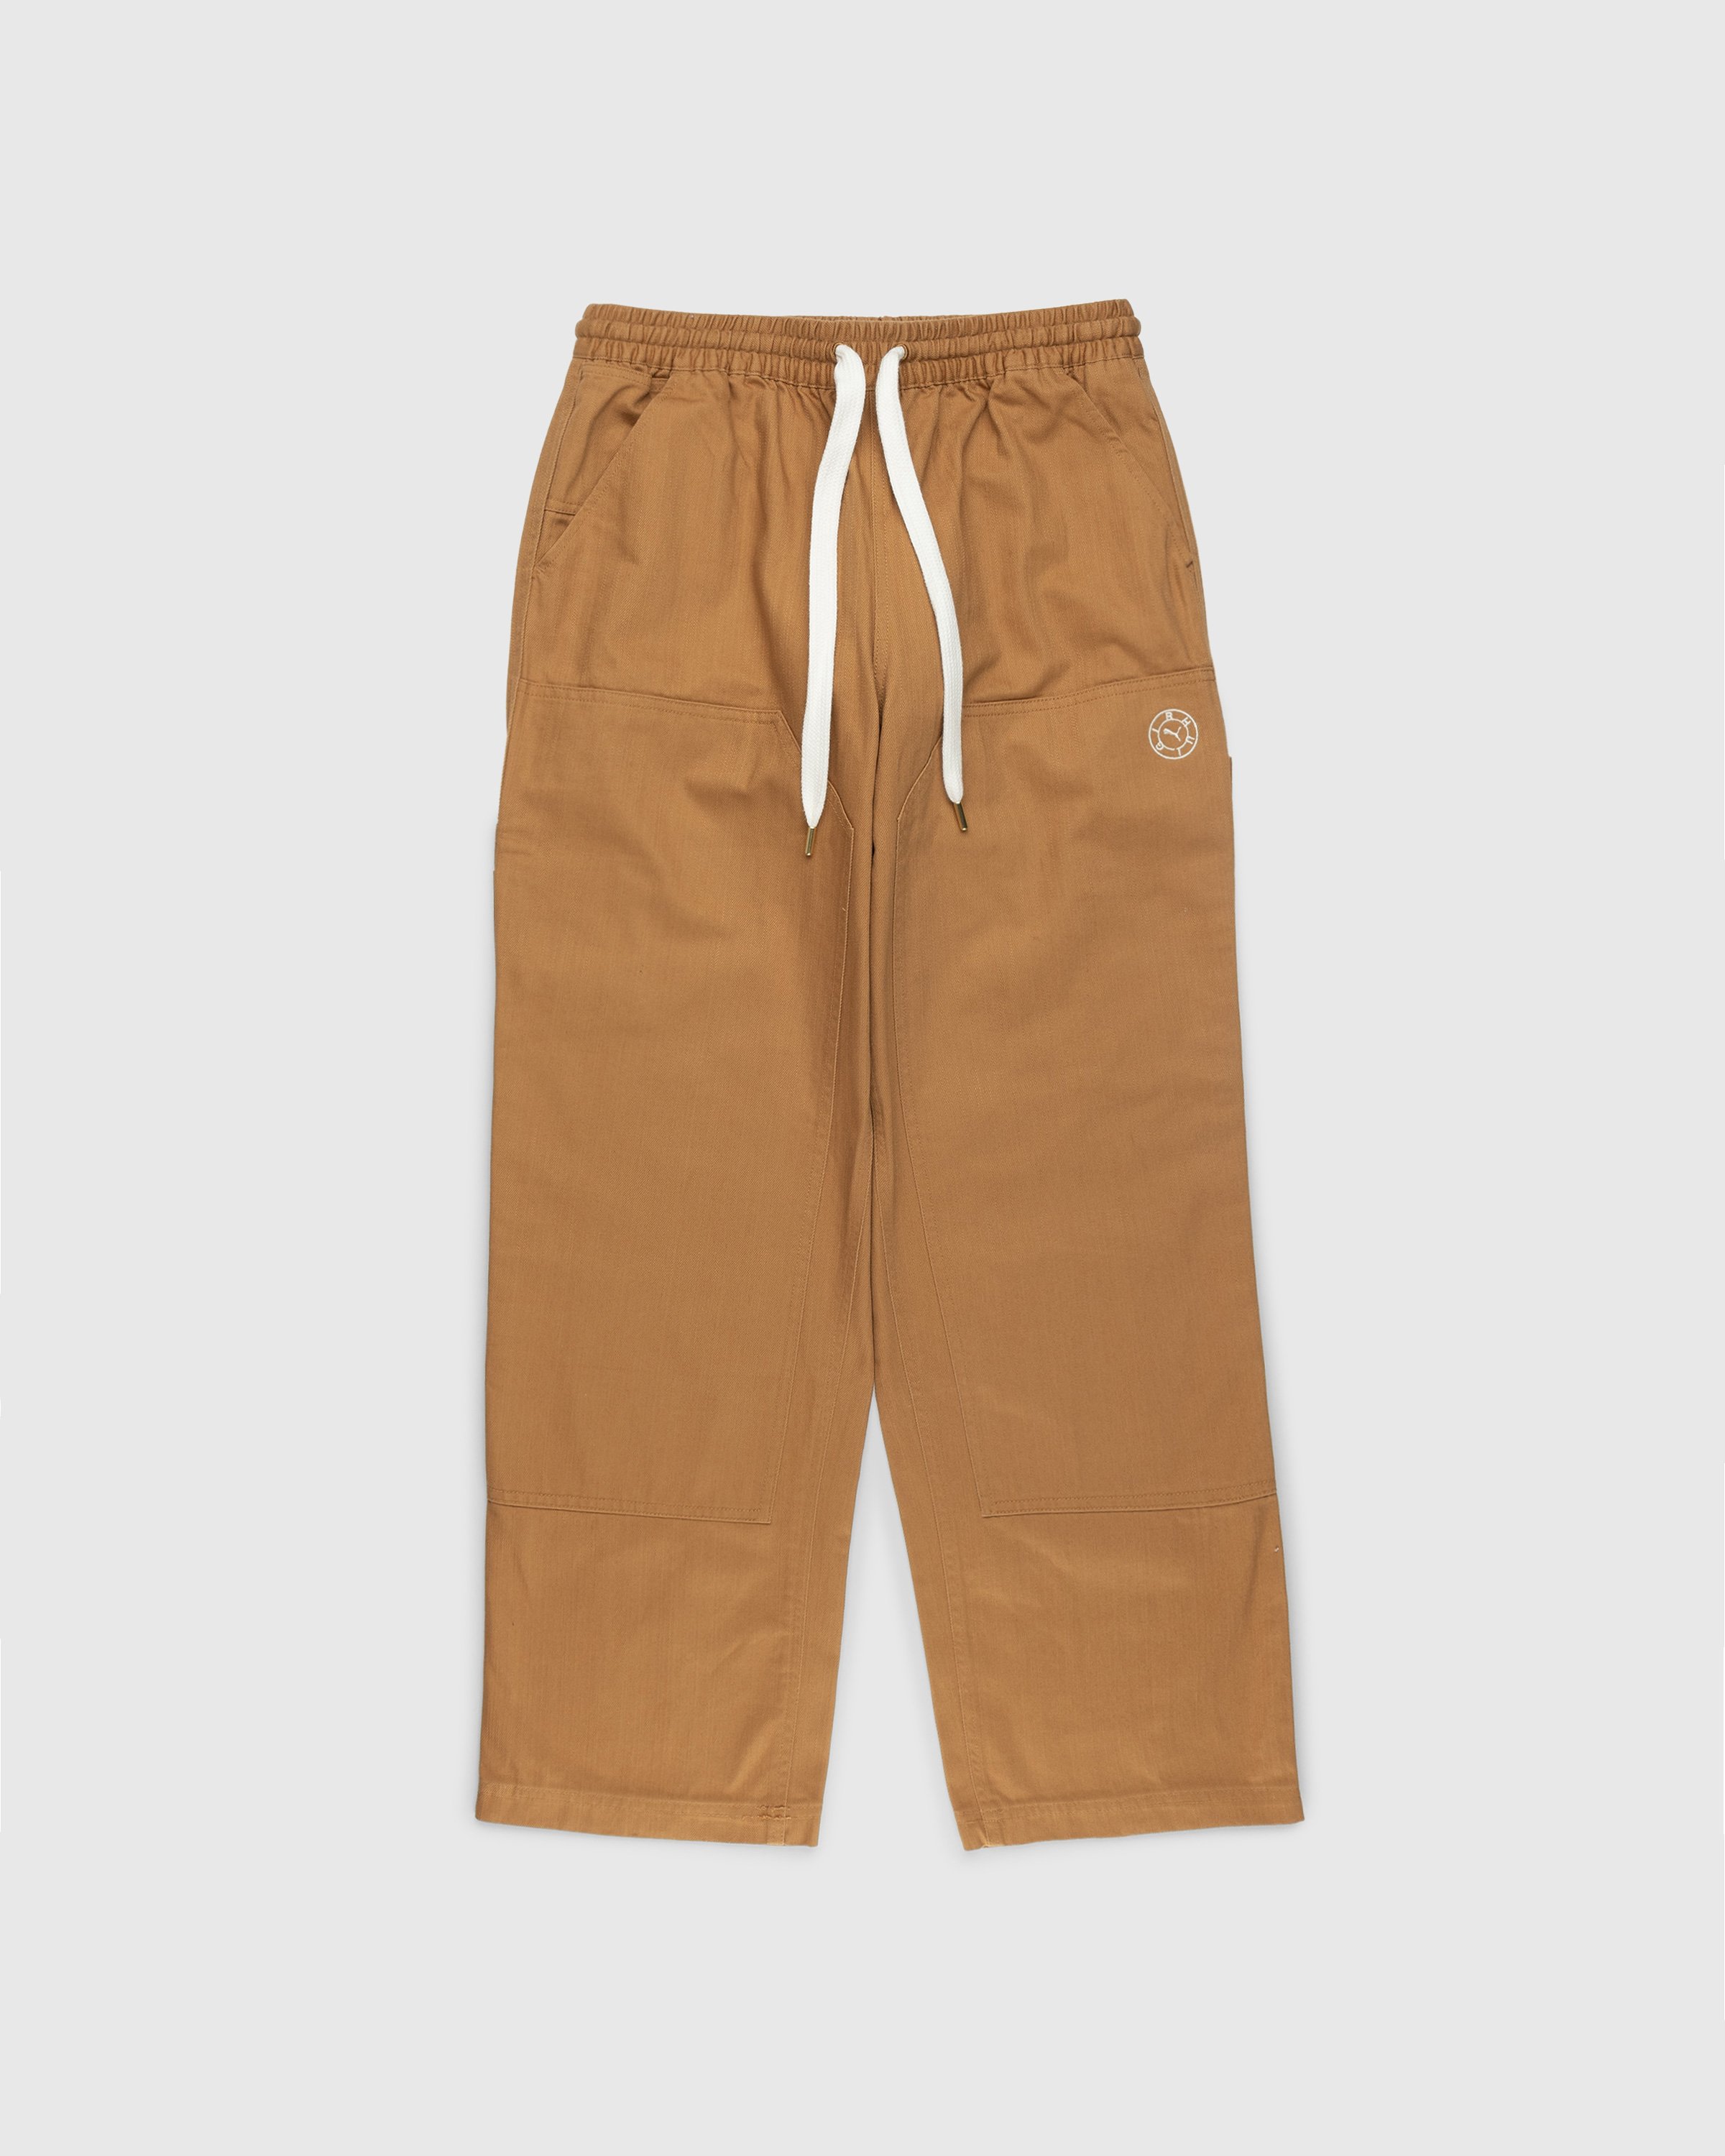 Puma x Rhuigi - Double Knee Pants Desert Tan - Clothing - Brown - Image 1